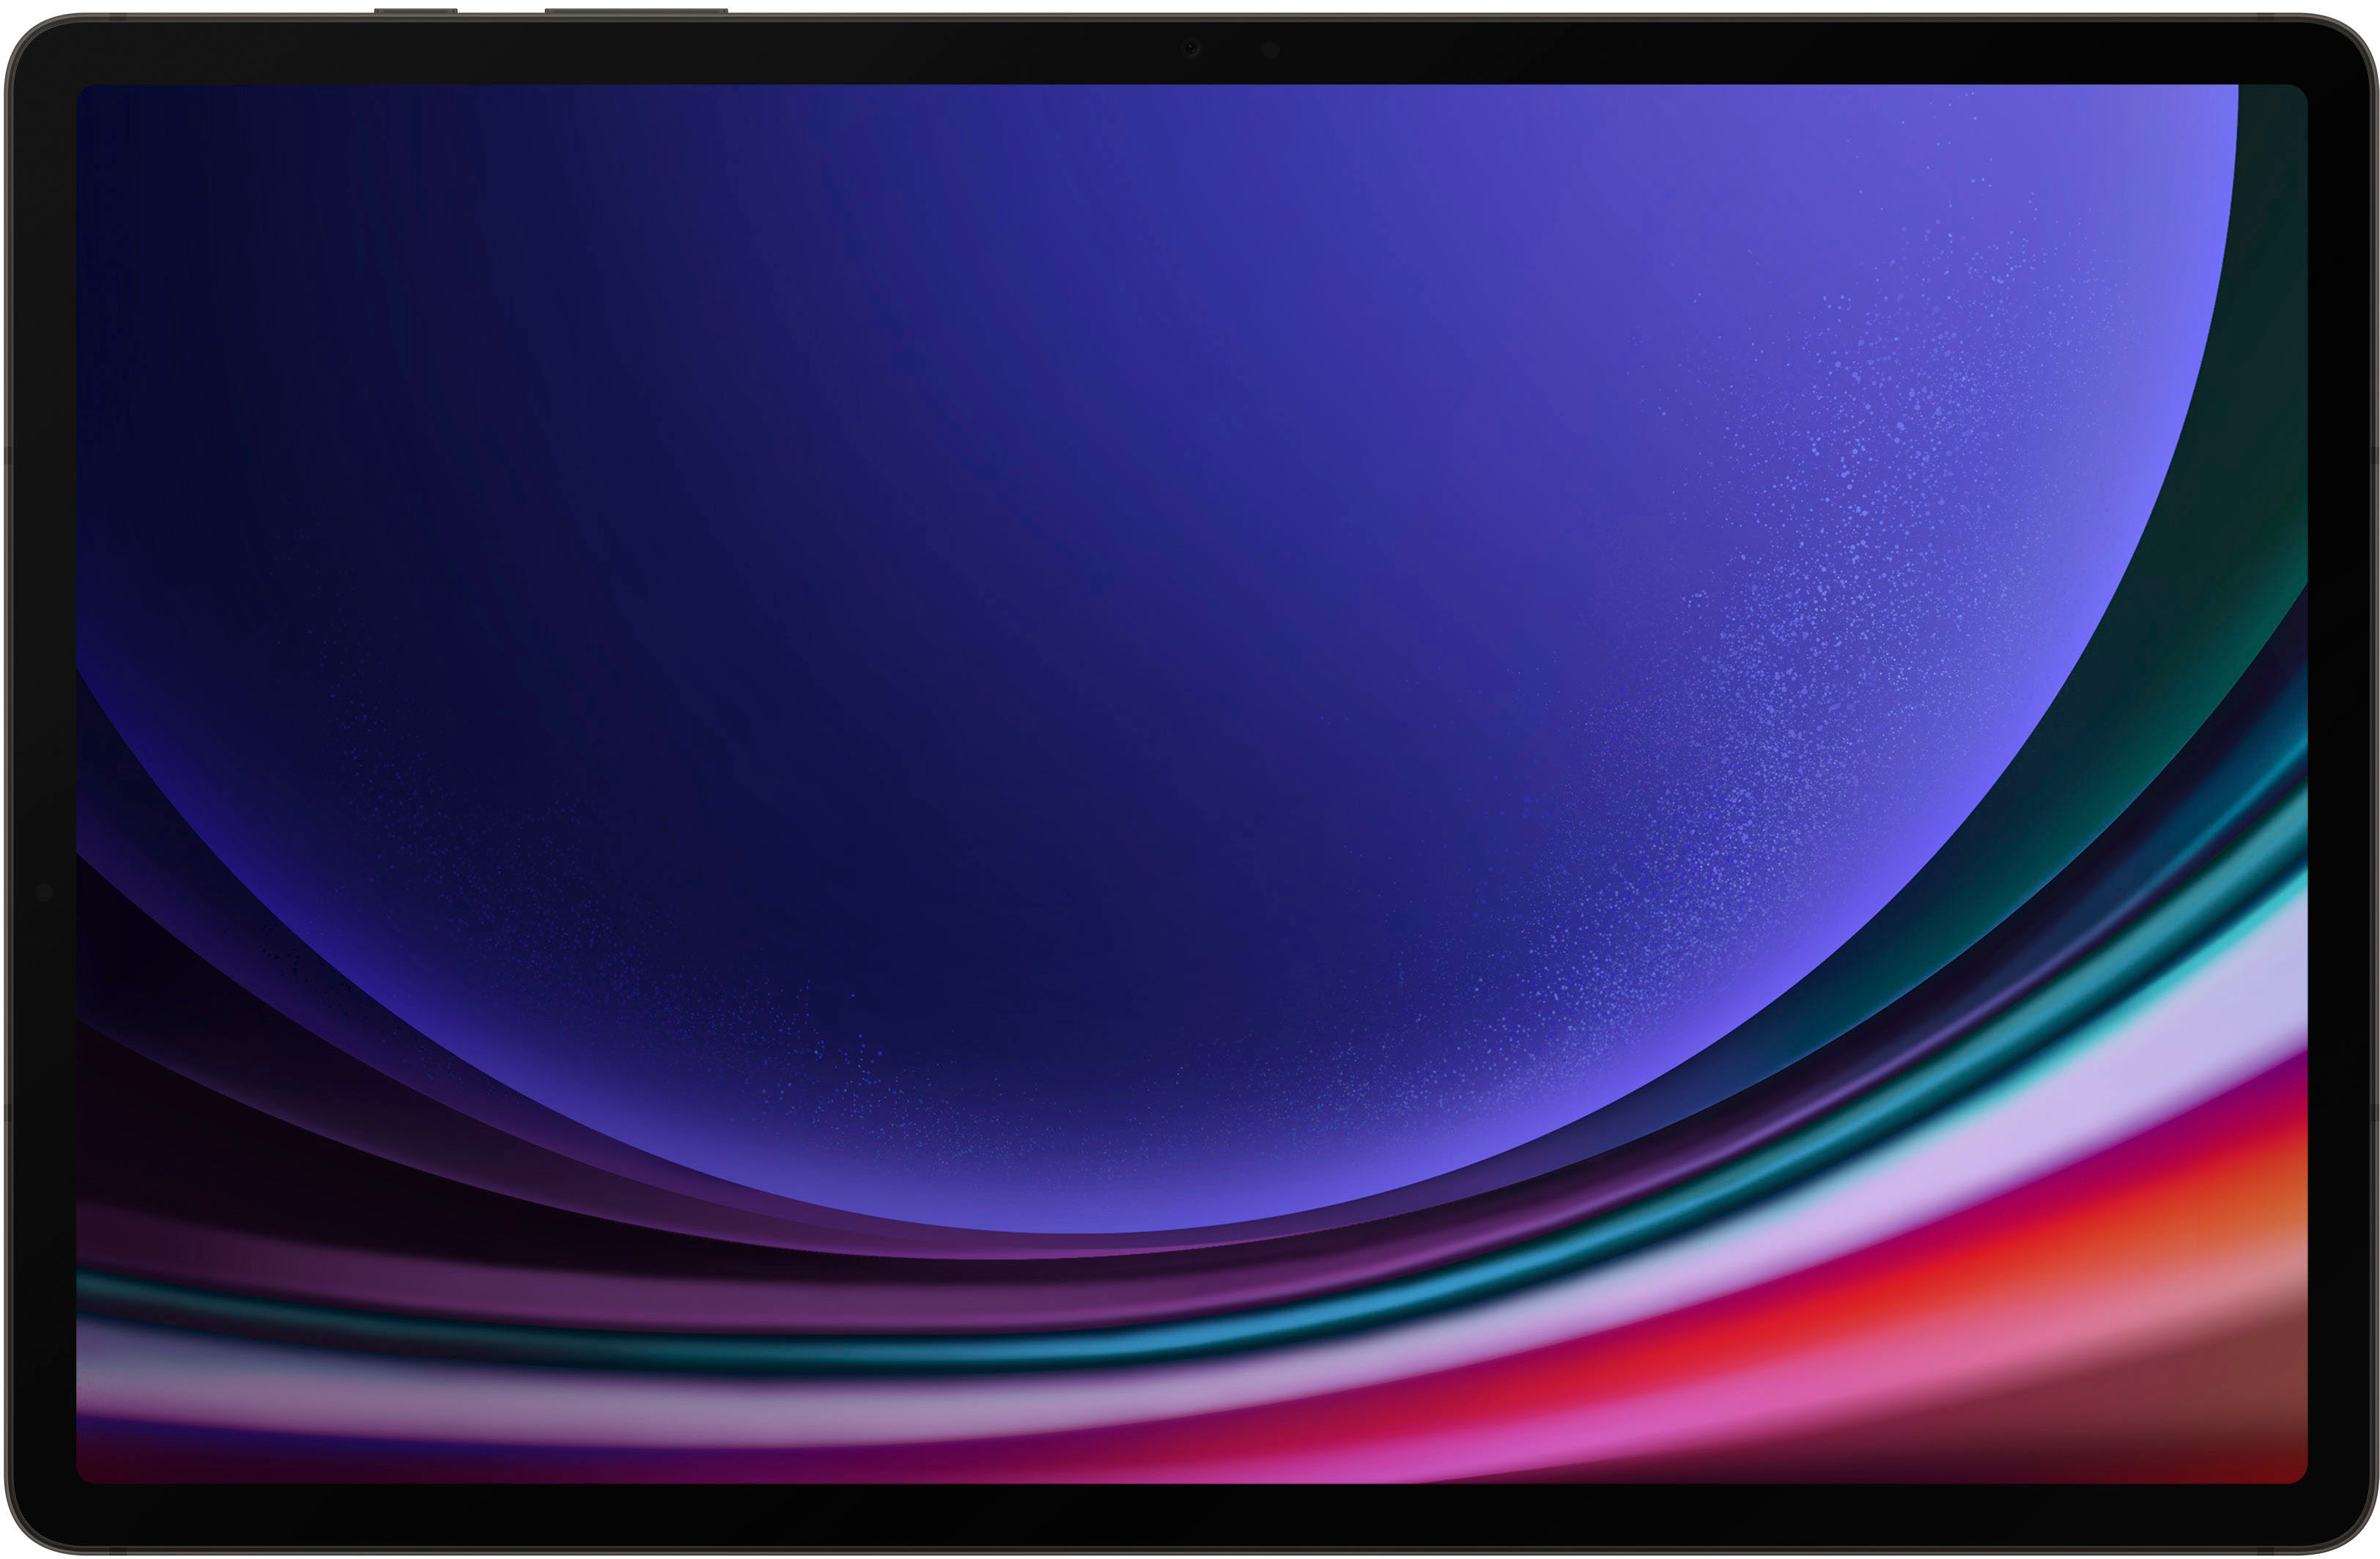 Samsung Galaxy Tab S9+ Wifi, Tablets